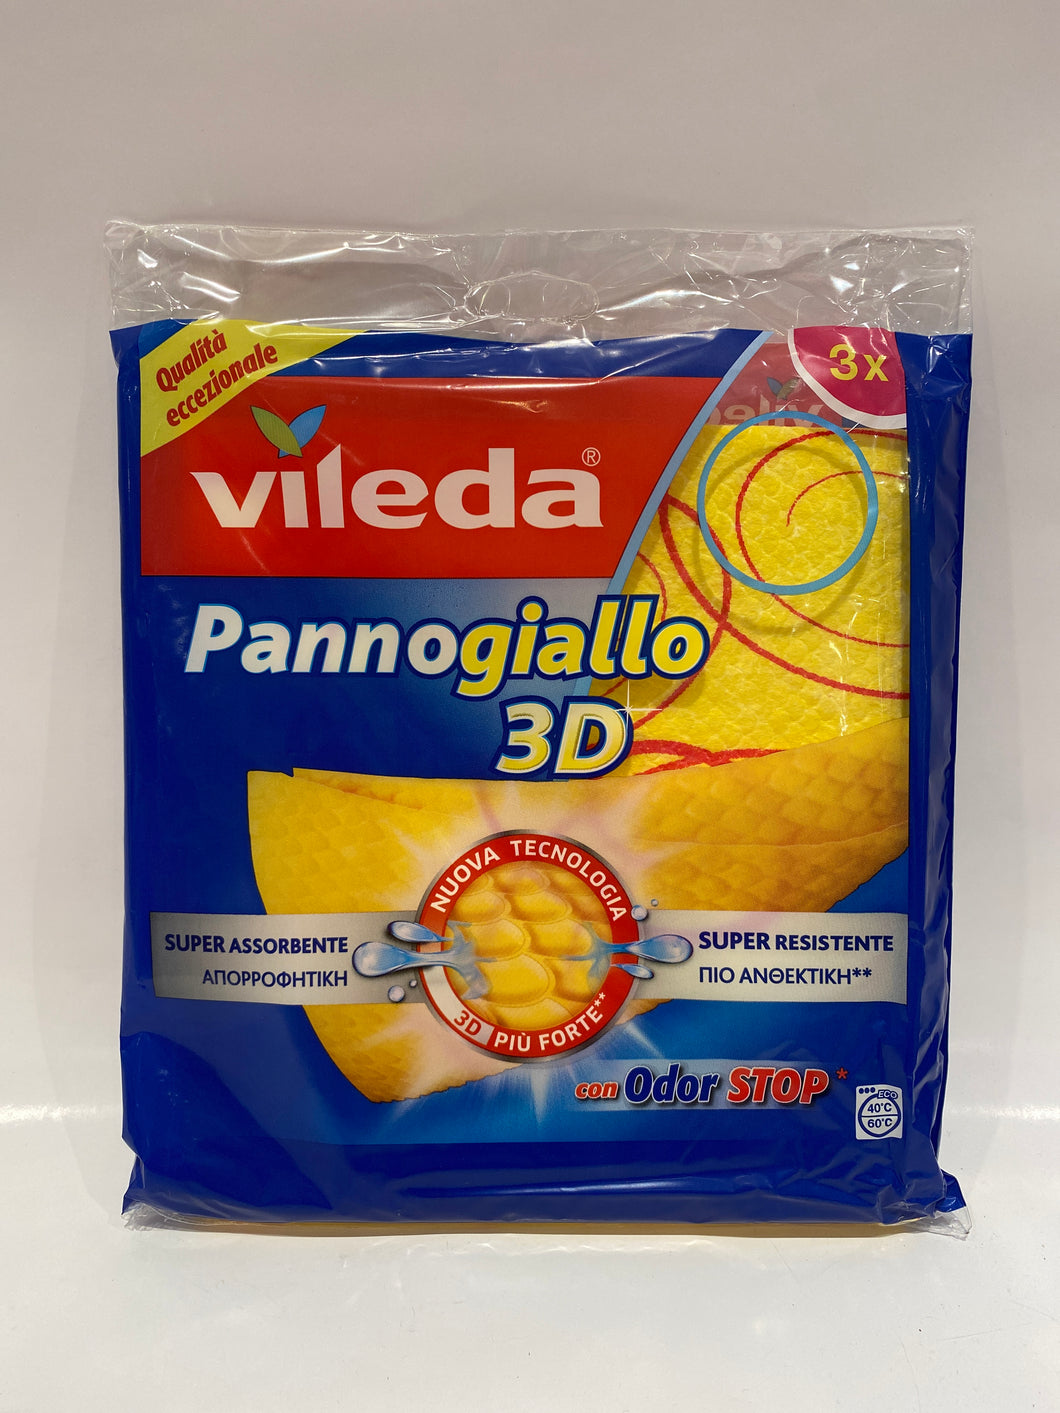 Vileda - Yellow Italian Cleaning Cloth